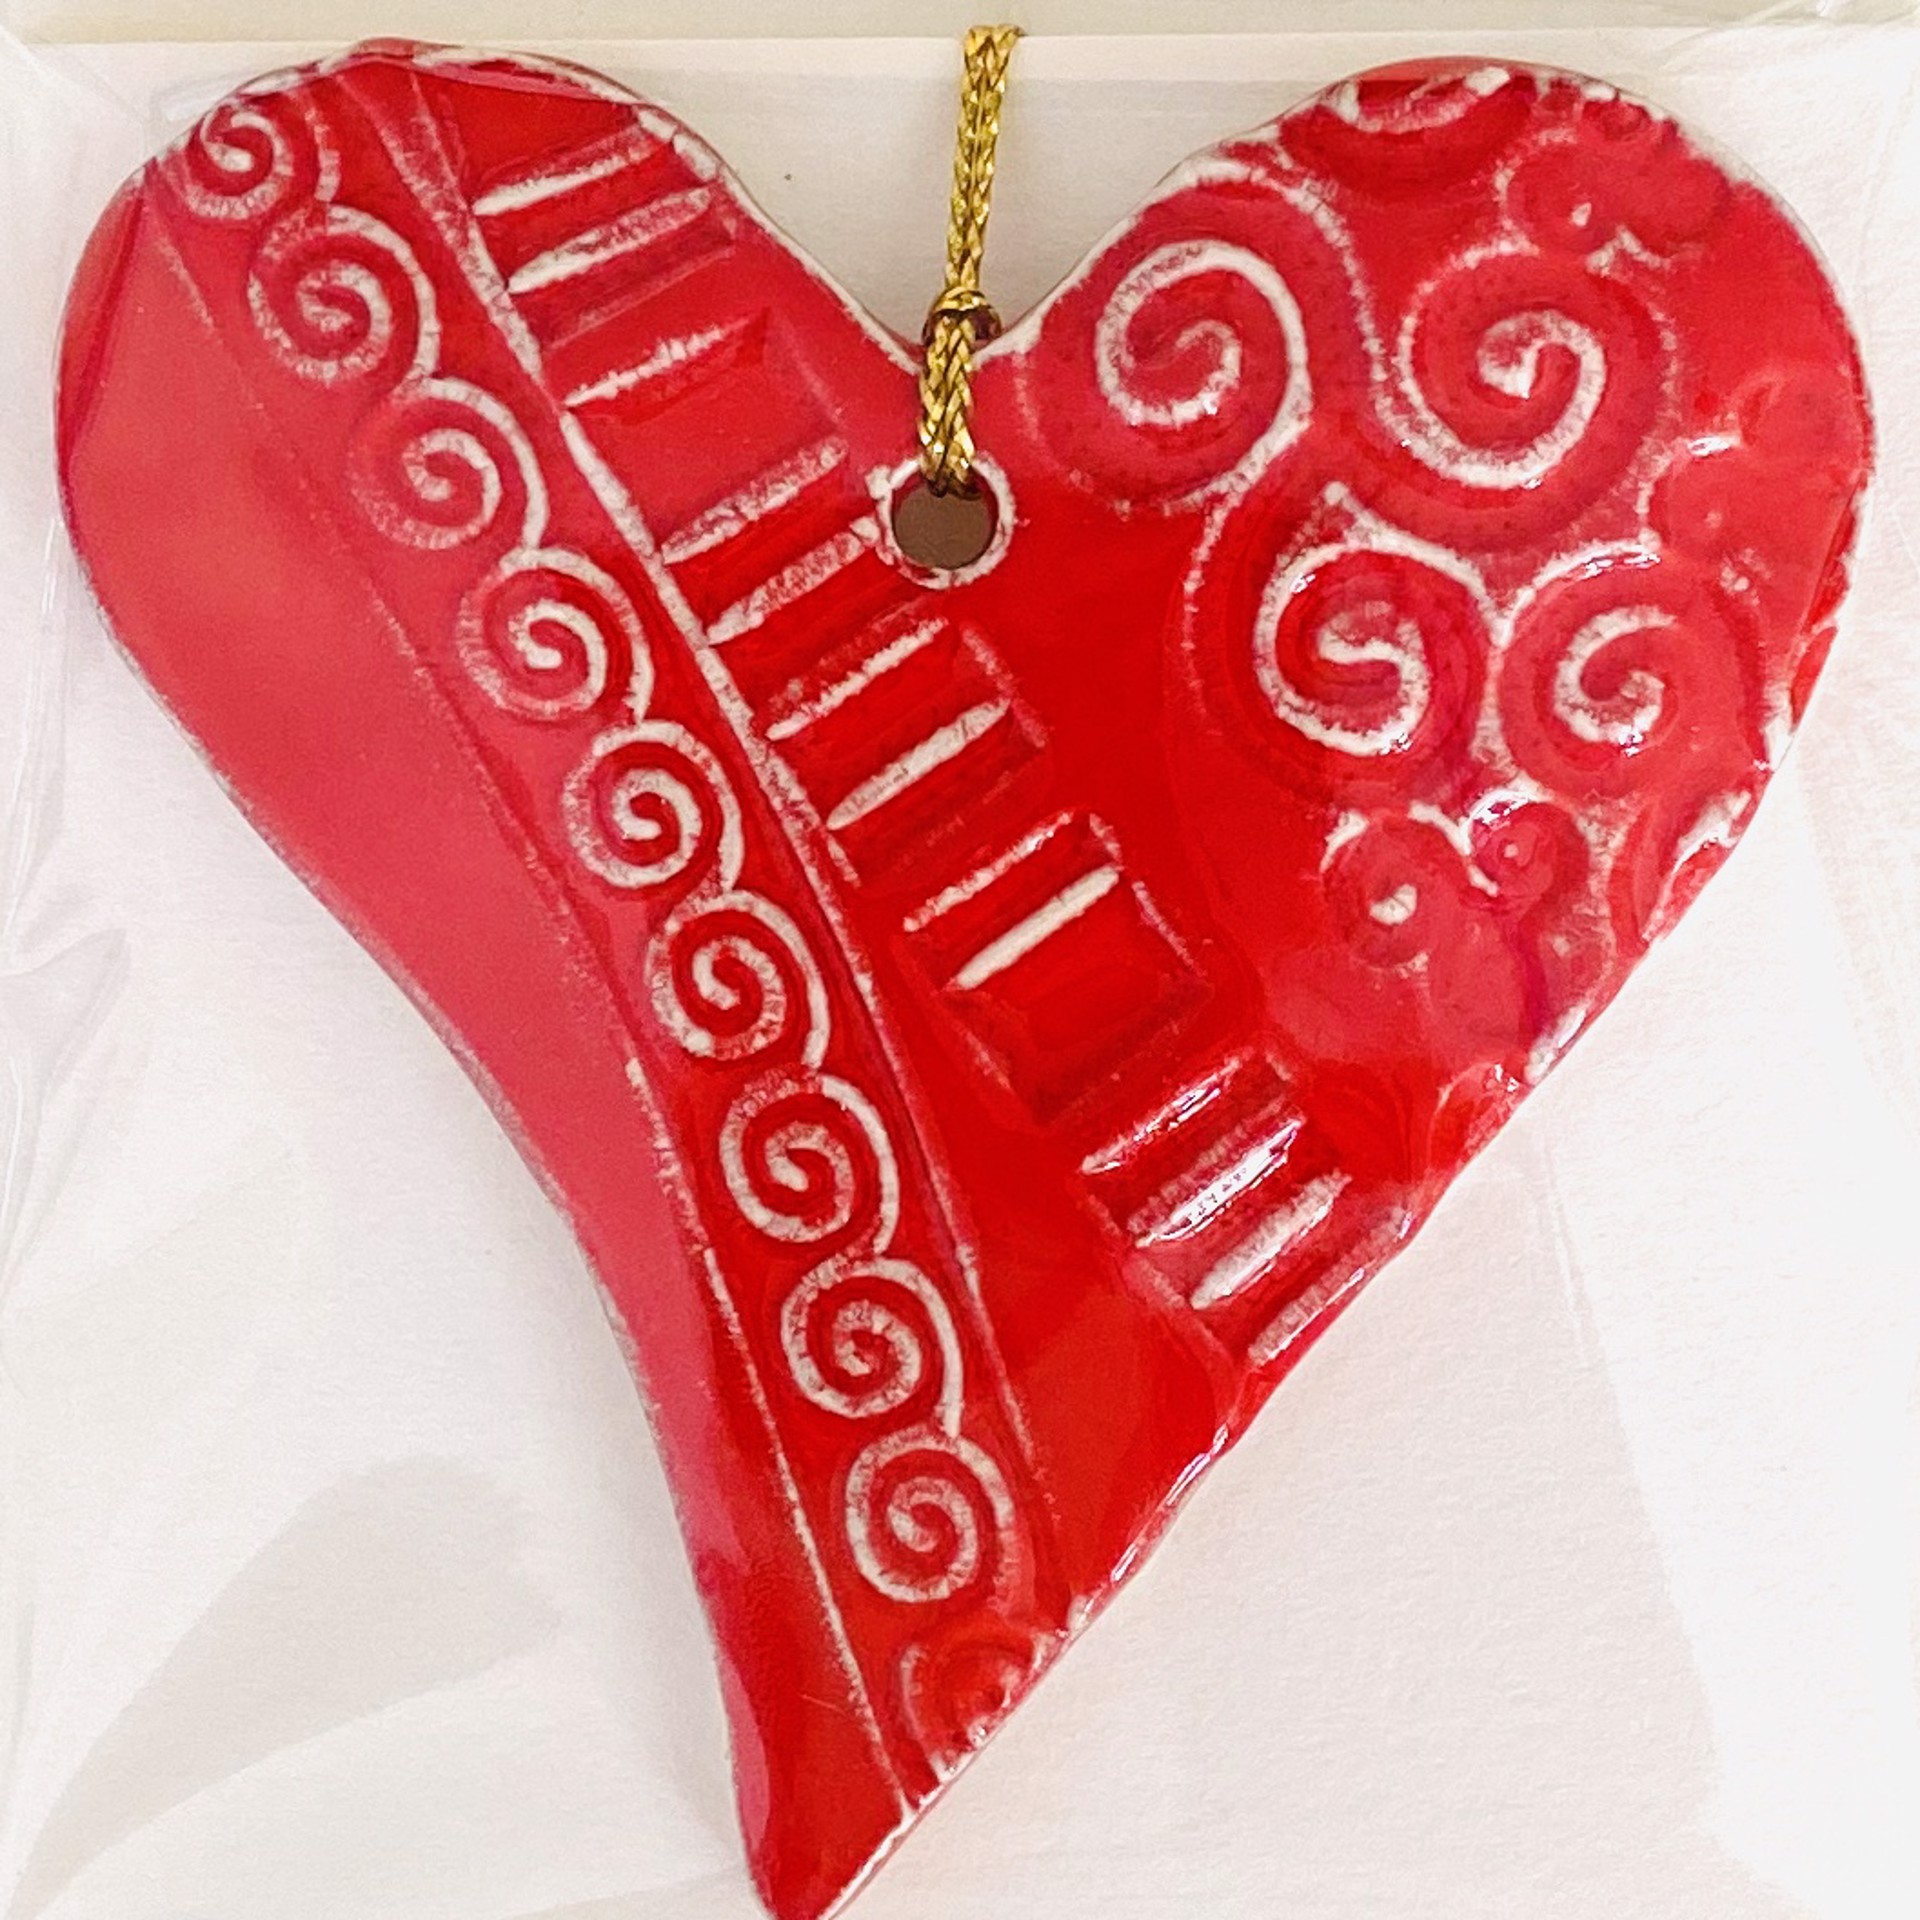 Heart Ornament-Red, assorted designs by Marty Biernbaum